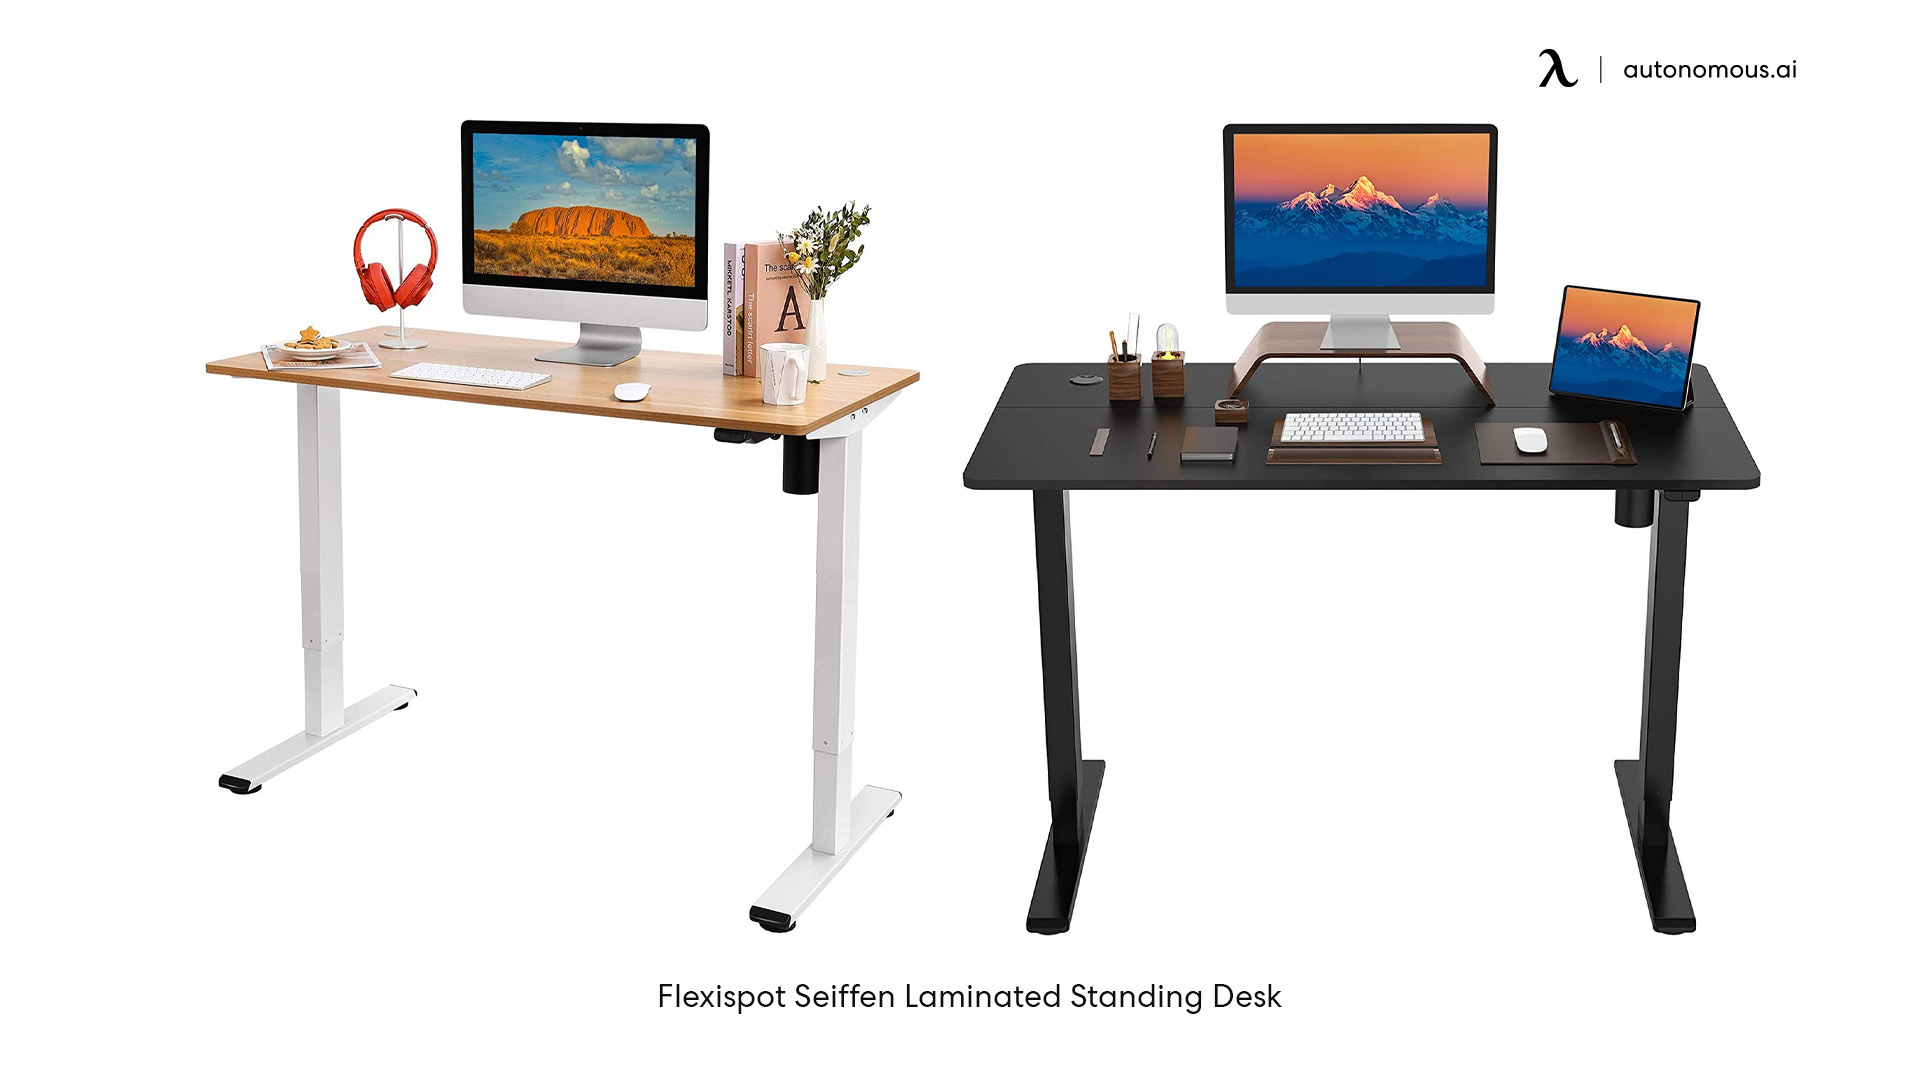 Flexispot Seiffen Laminated Standing Desk